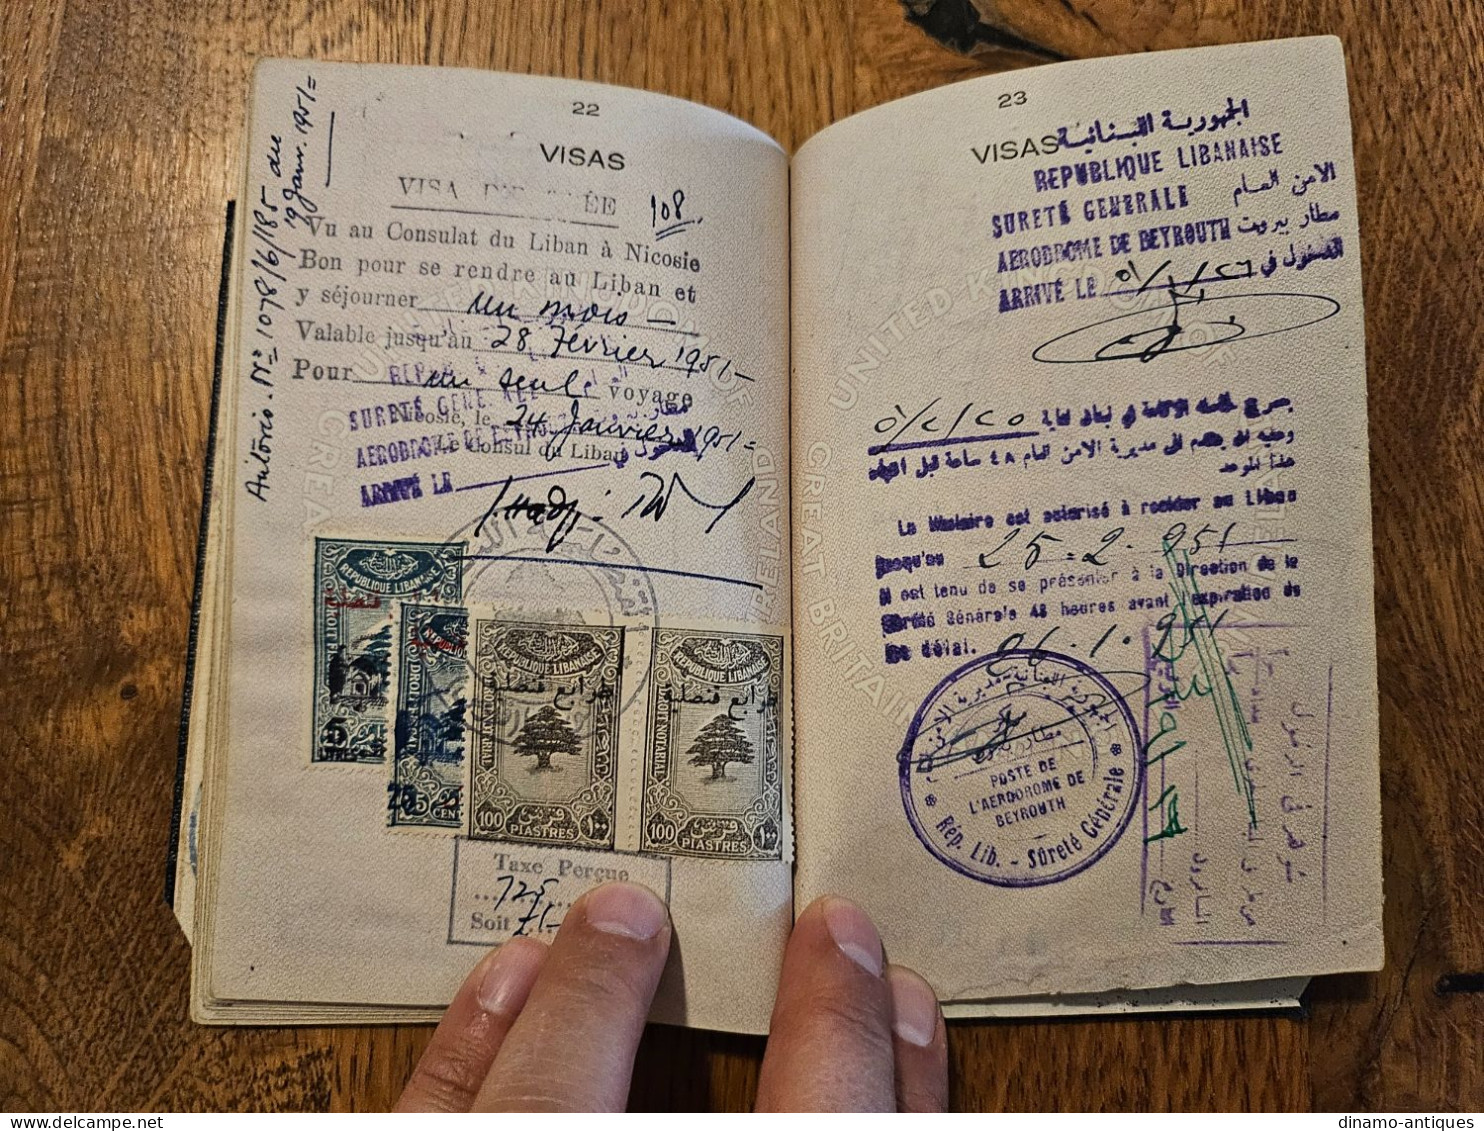 1949 Colony Cyprus passport passeport - travel to Lebanon Egypt Turkey Syria Greece Iraq Sudan Eritrea revenues fiscal